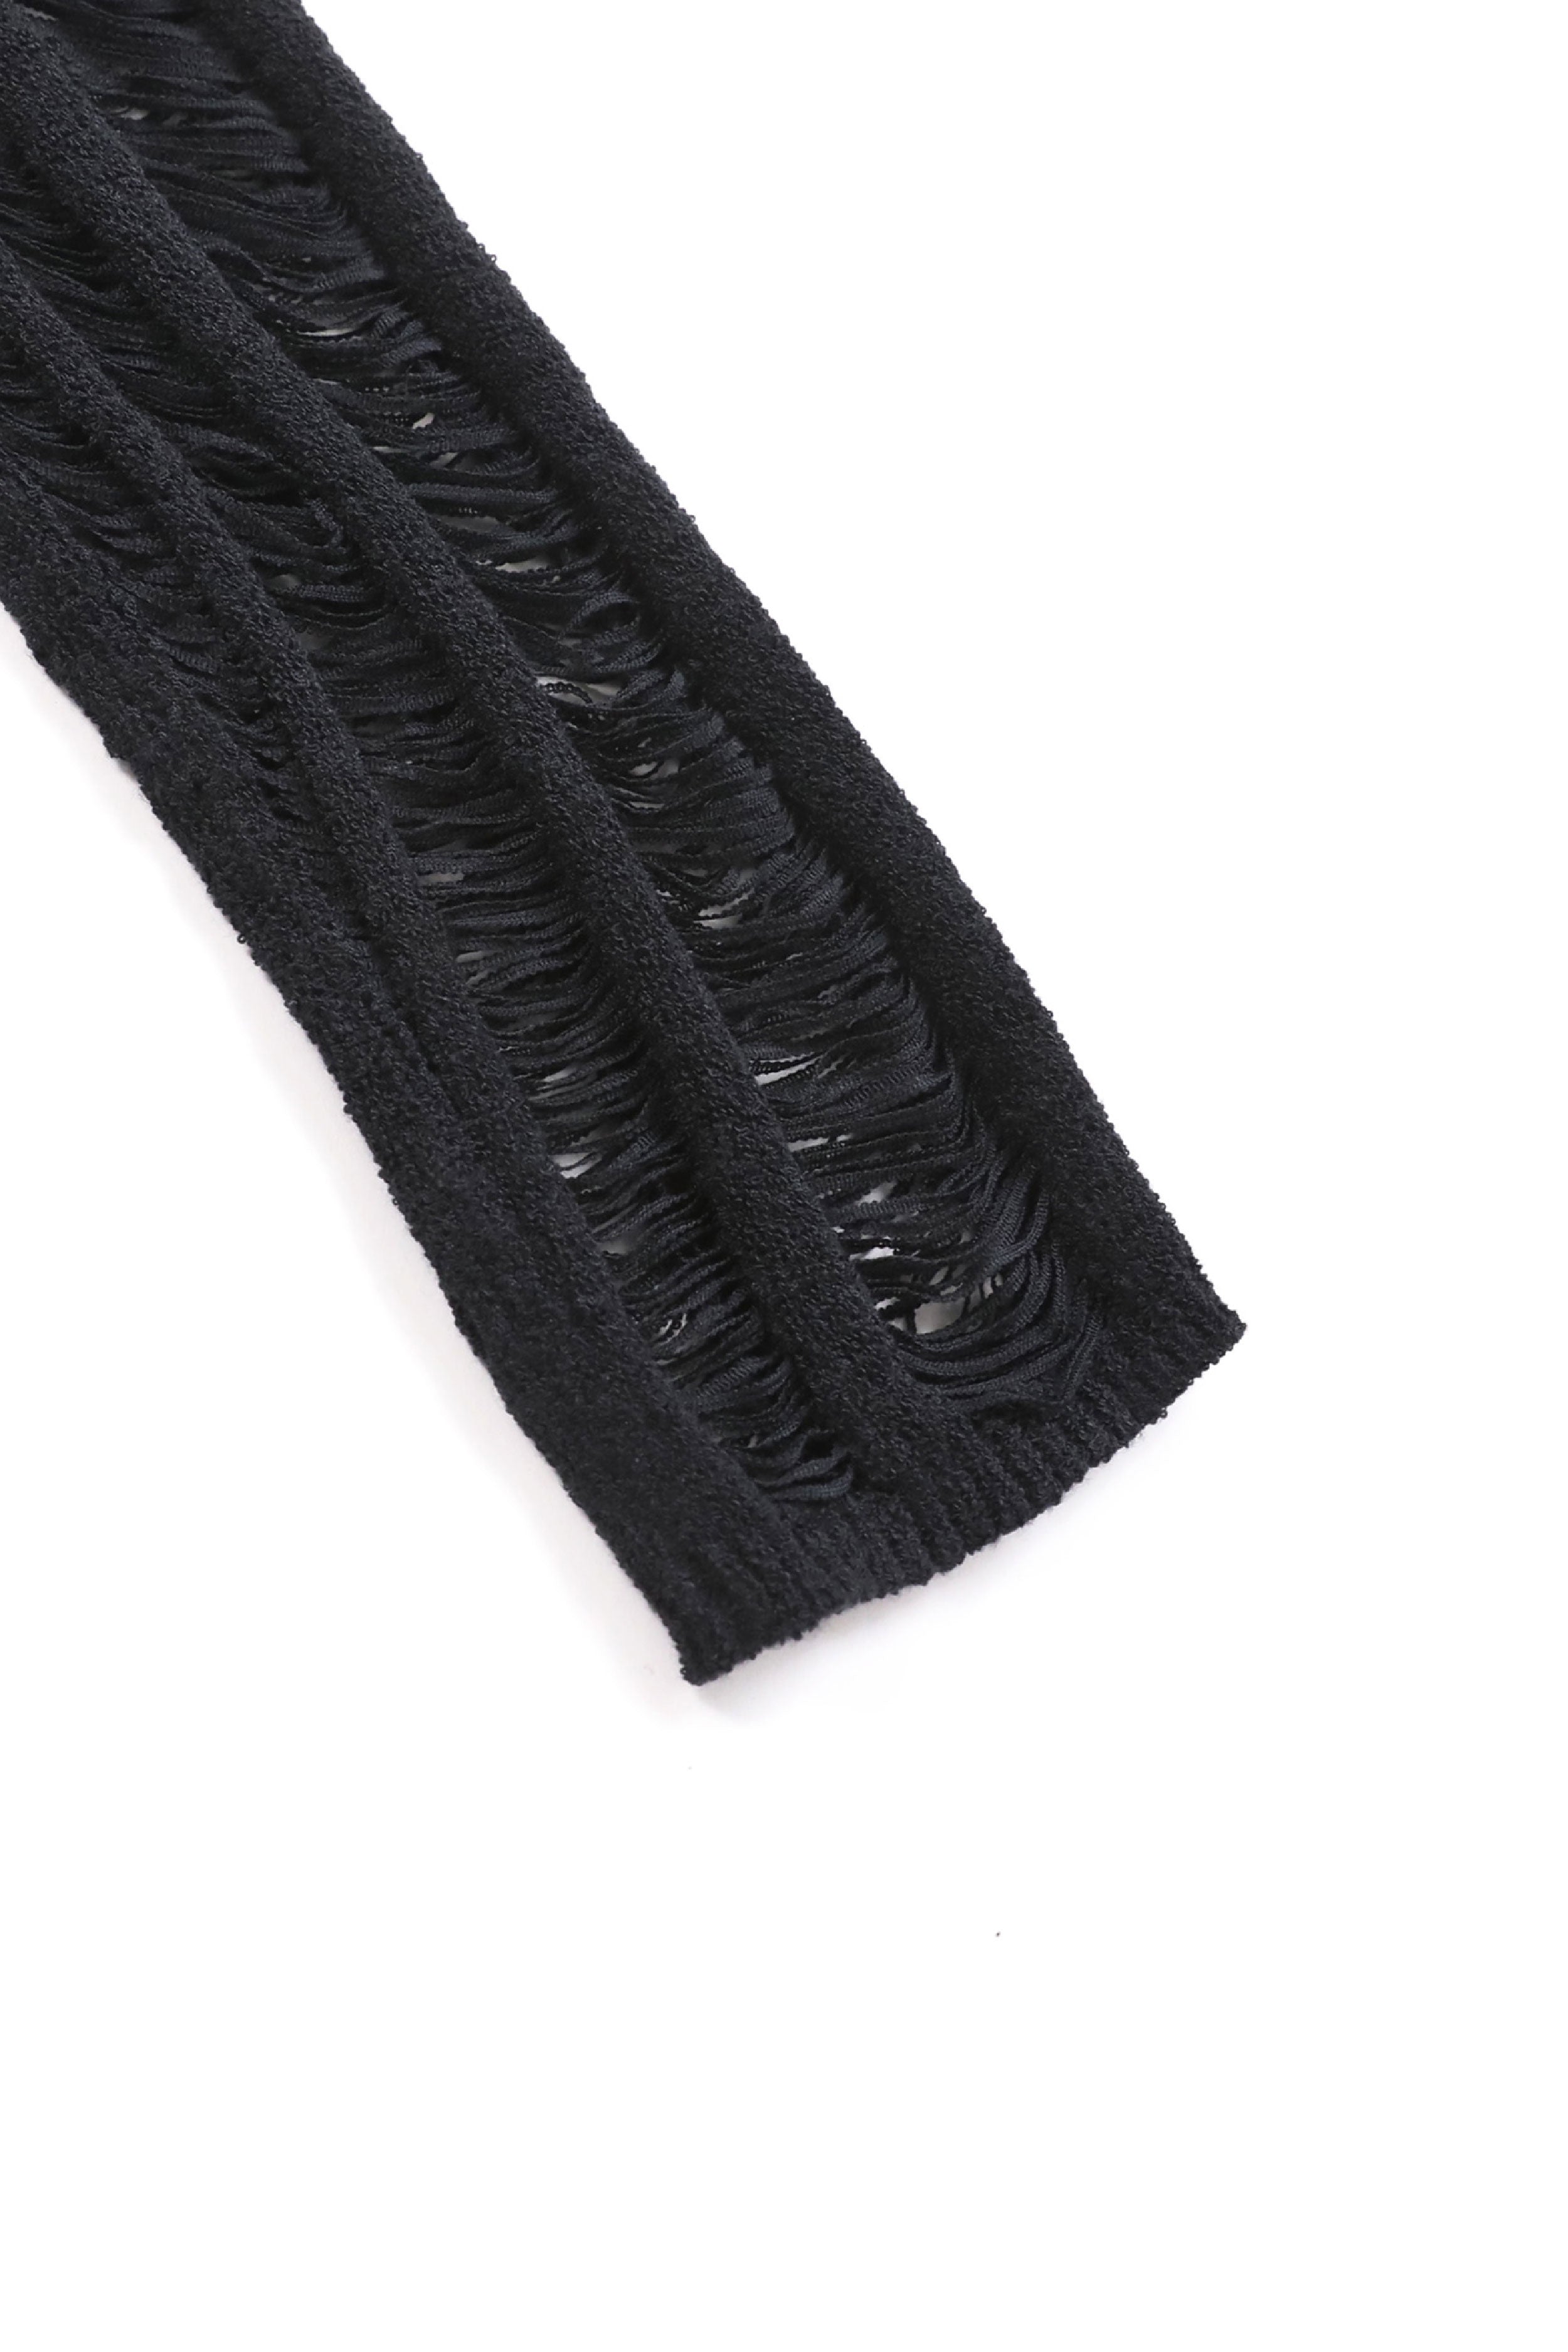 Badblood Ladder Knit Long Sleeve Easy Fit Black